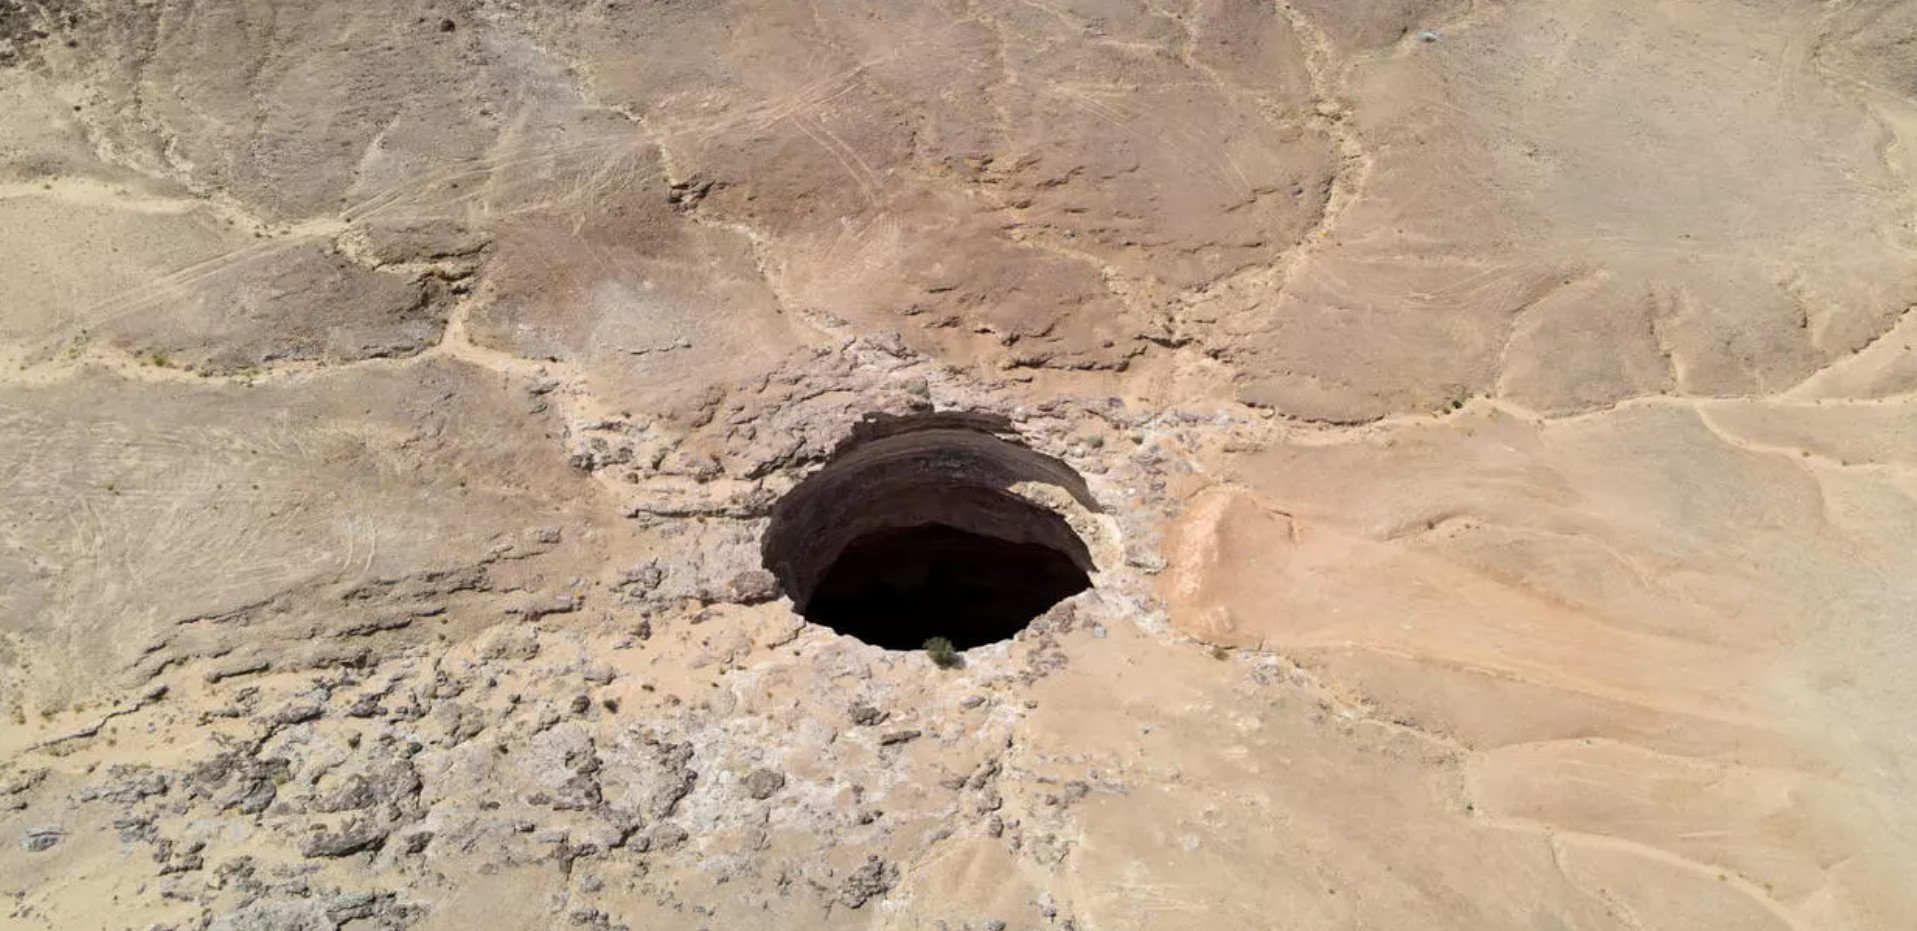 Well of Barhout, Well of Hell, yemen, The Well of Barhout also known as the Well of Hell in the desert of Yemen Al-Mahra province